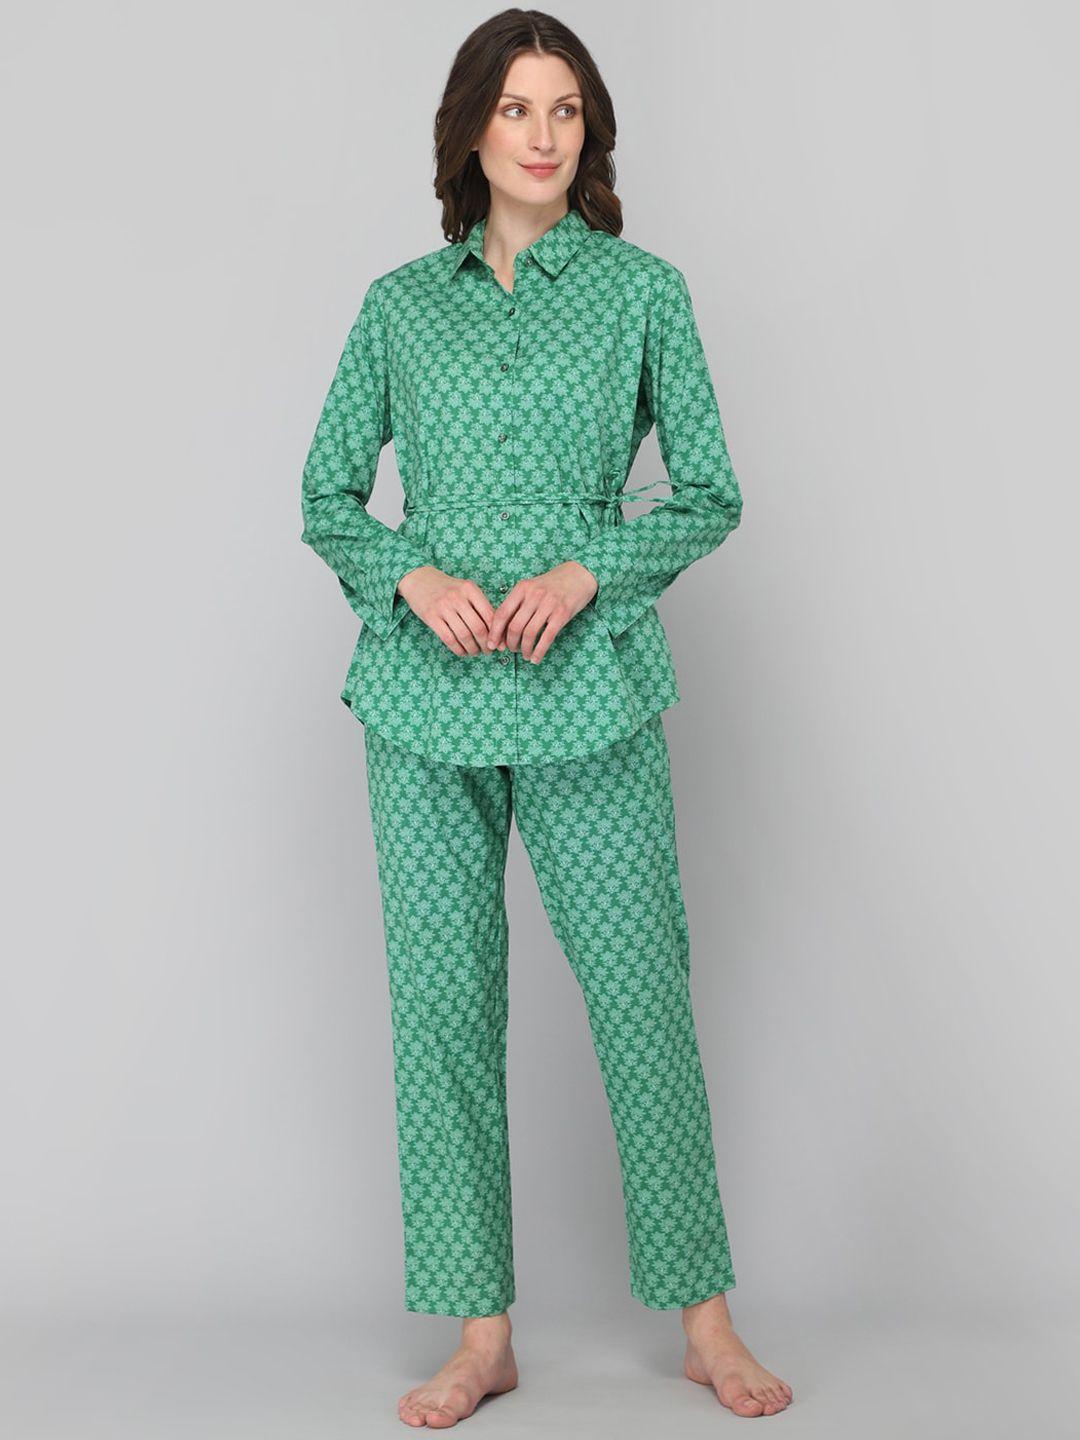 drape in vogue women green printed night suit